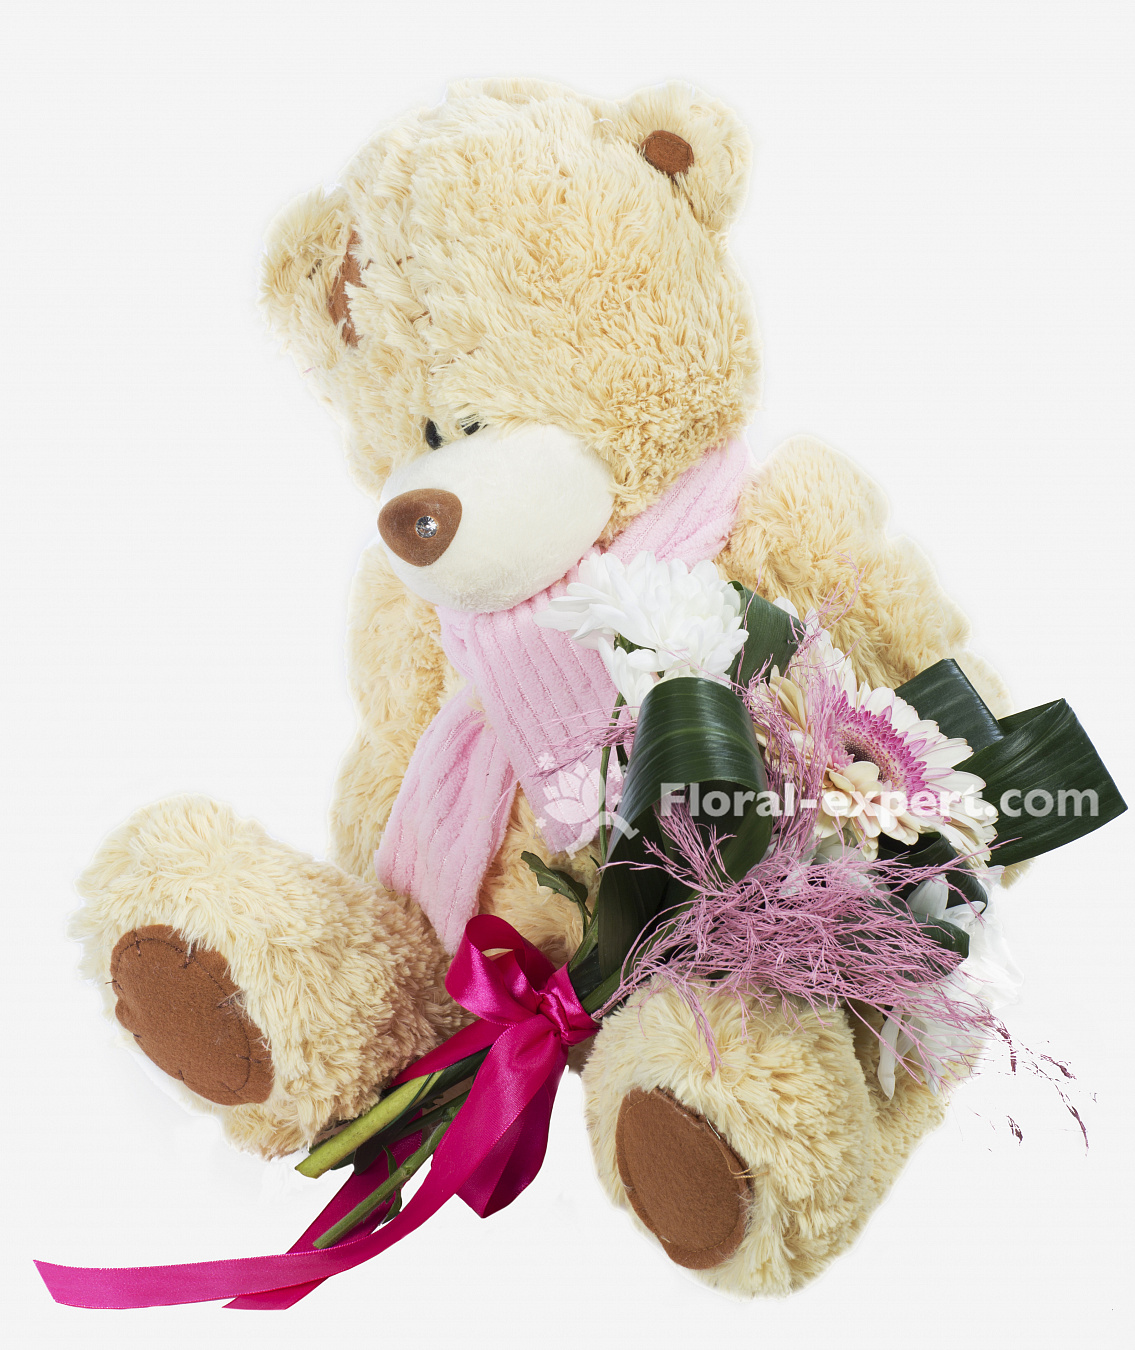 Romantic teddy bear